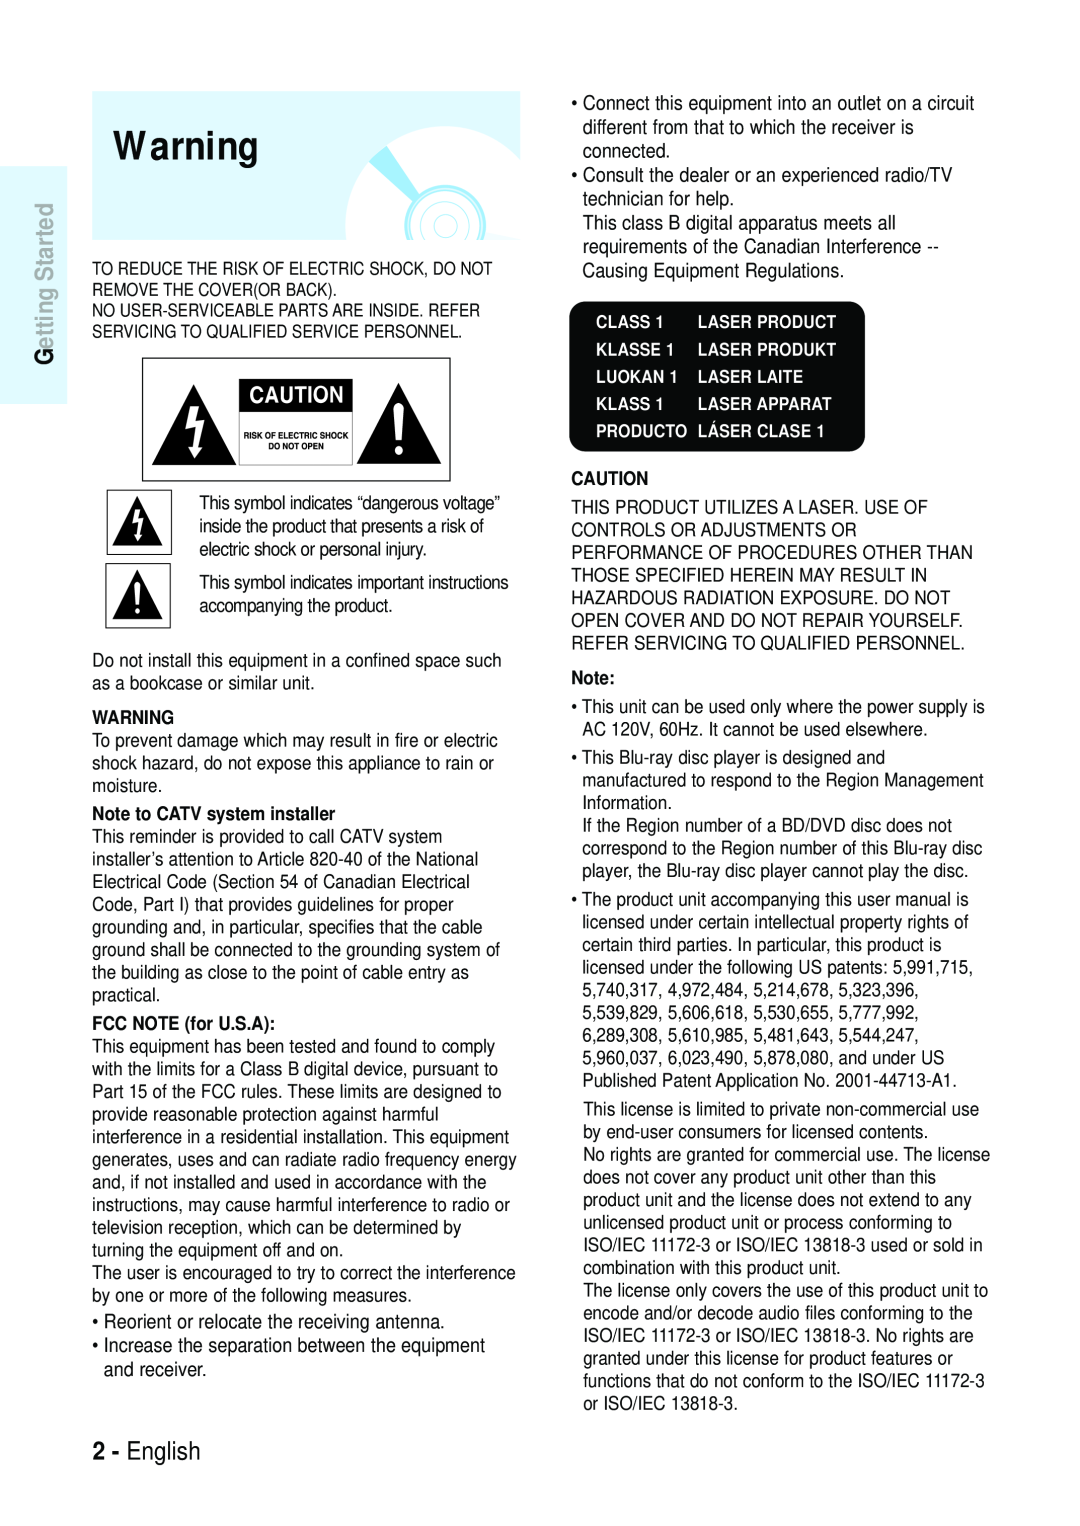 Samsung Blu-ray Disc manual Getting Started, English 